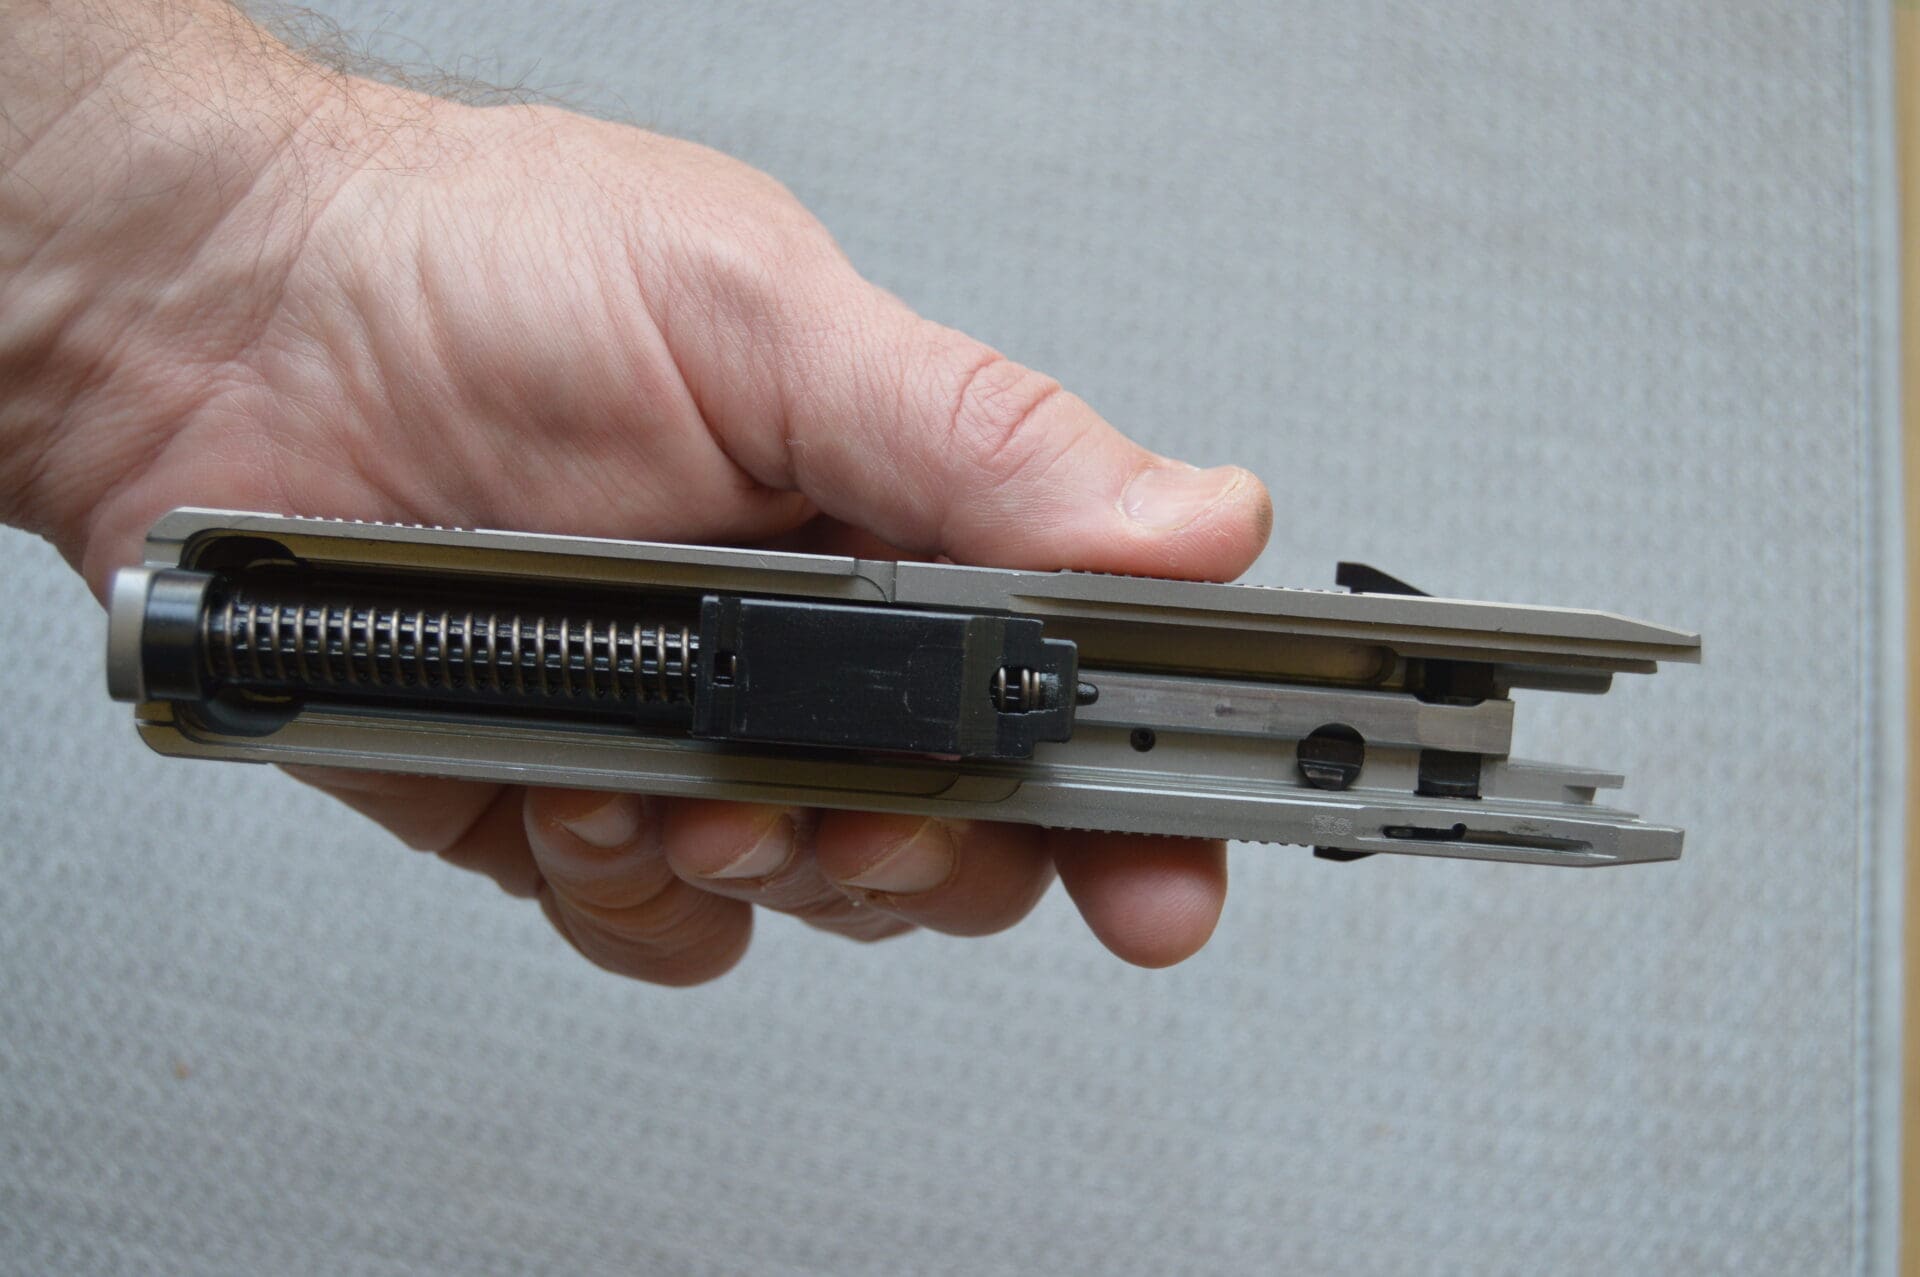 Gun Review: Beretta PX4 Storm Inox 9mm